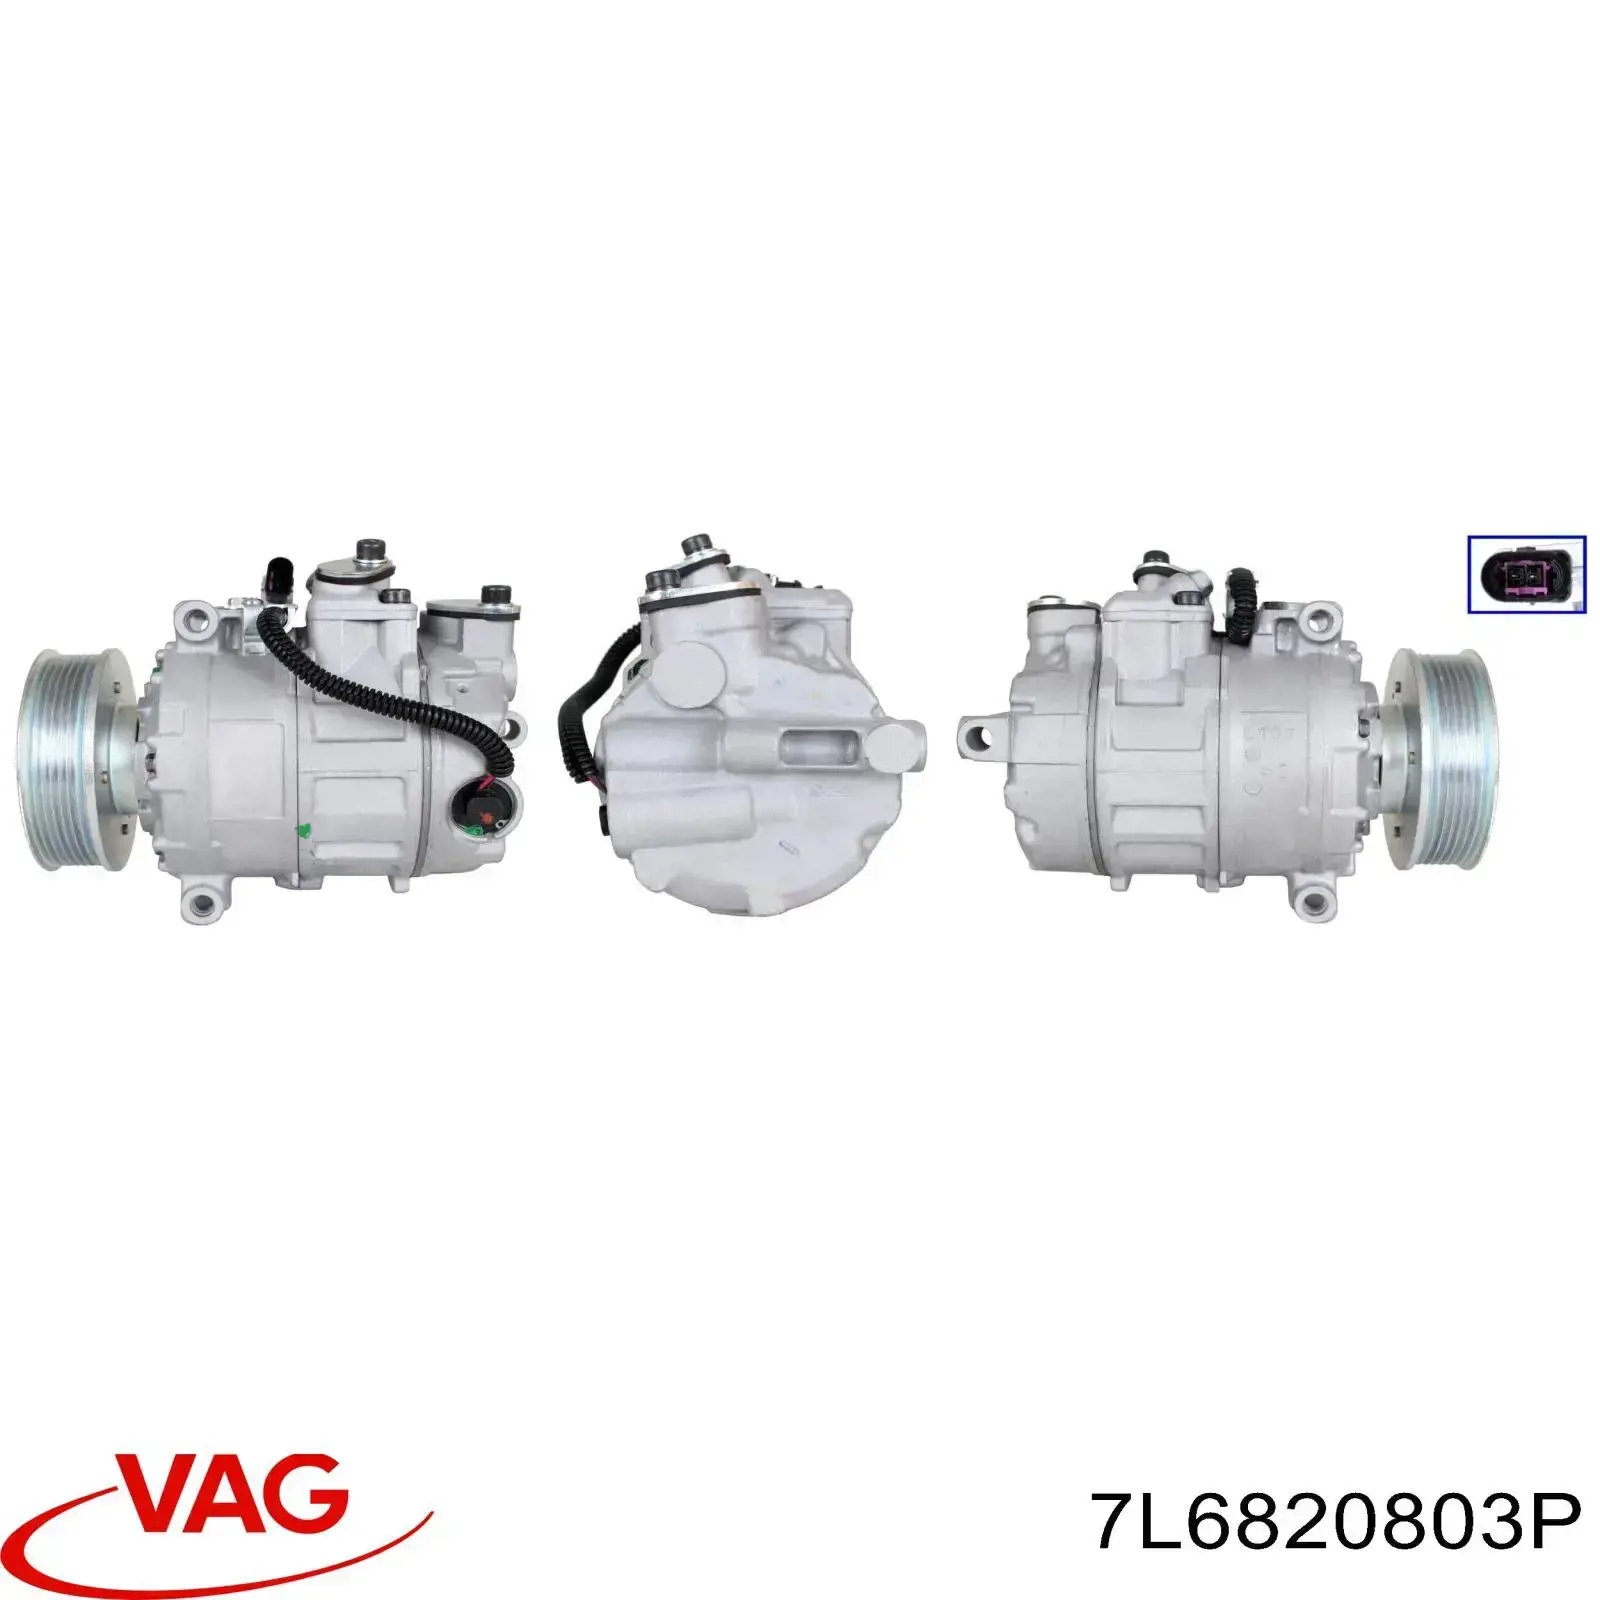 7L6820803P VAG compresor de aire acondicionado